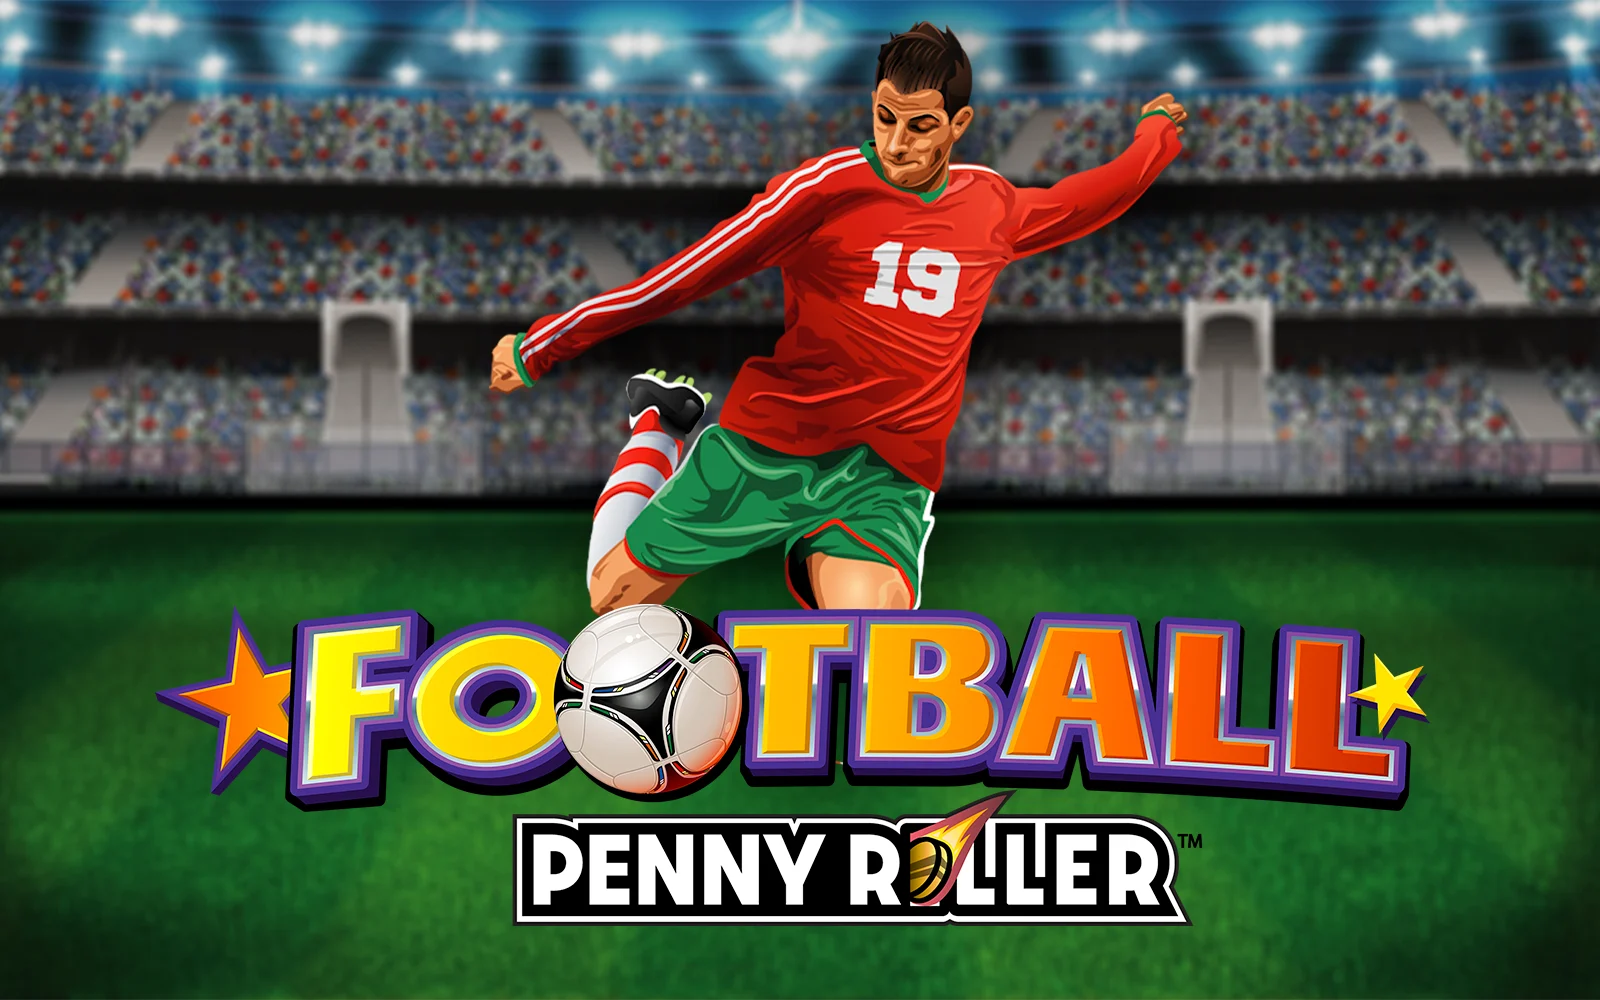 在Starcasino.be在线赌场上玩Football Penny Roller™